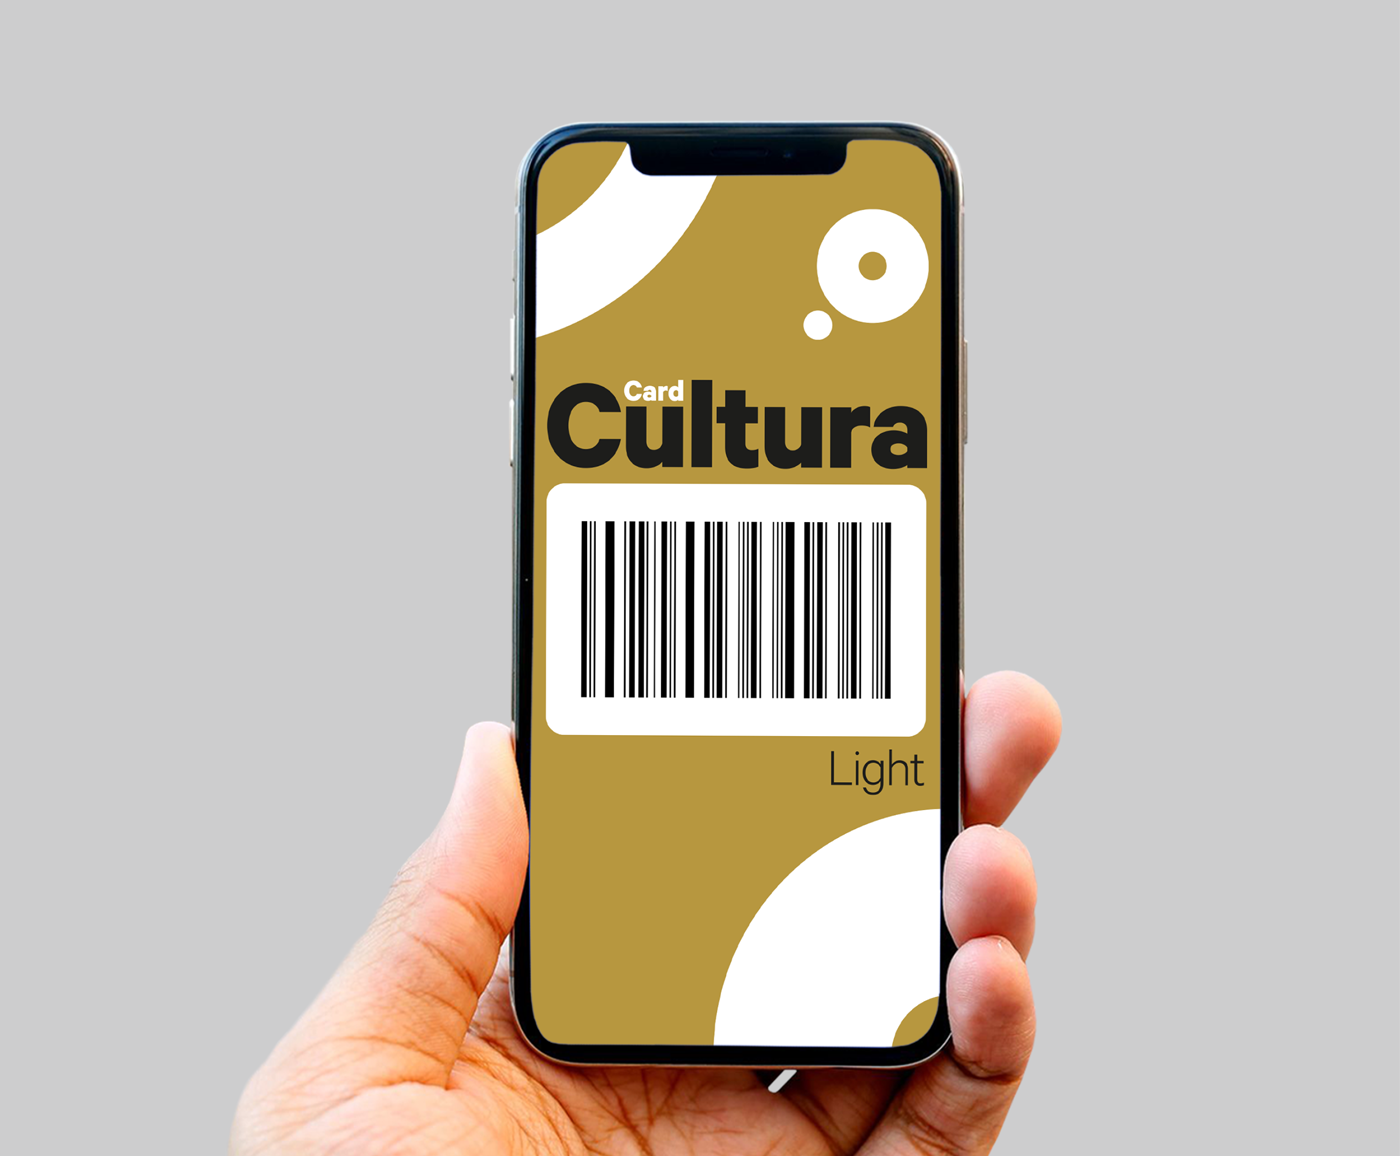 Gift Card Cultura Light